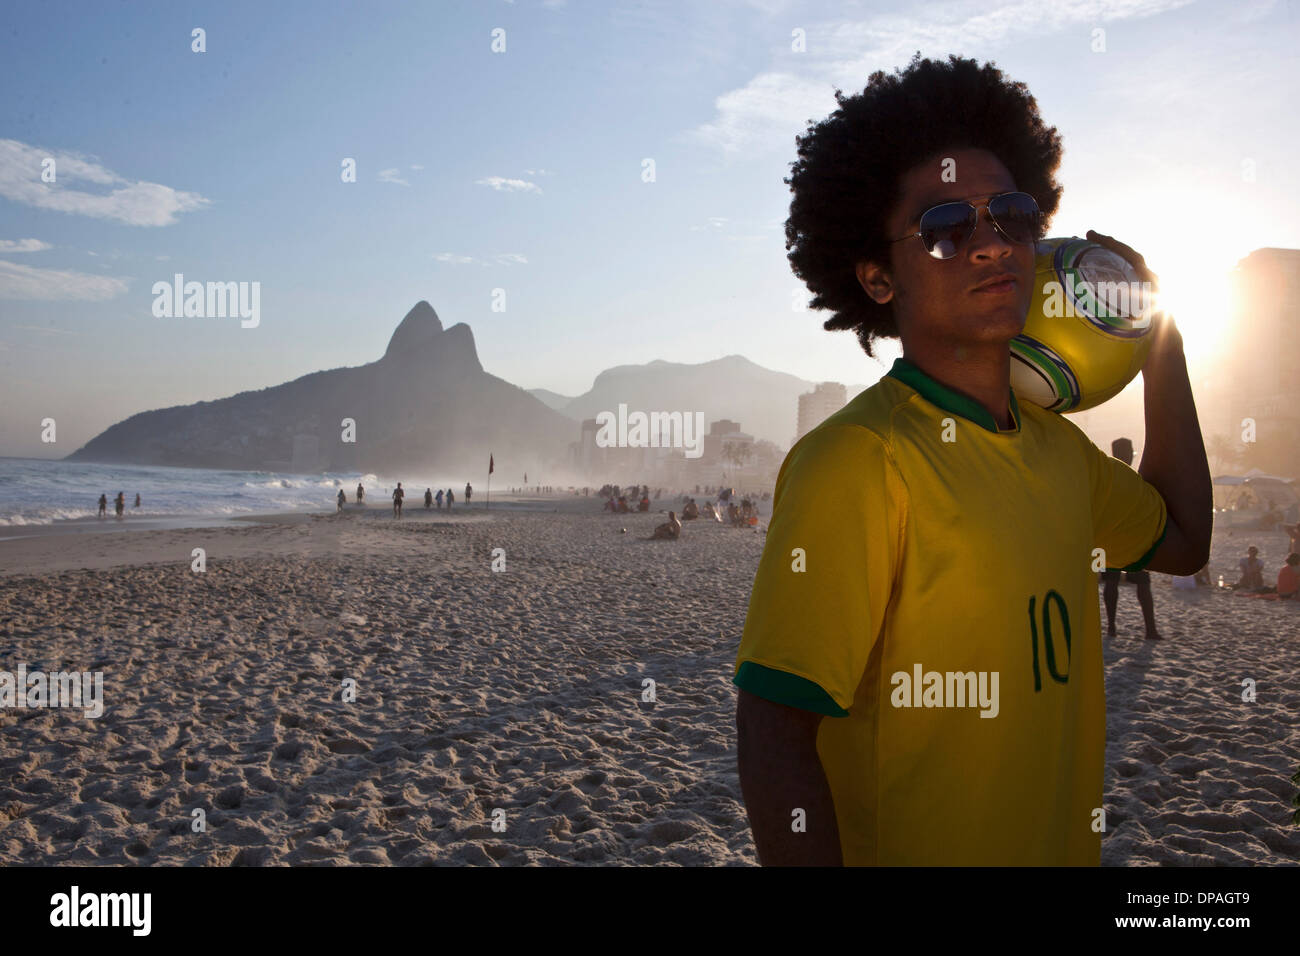 Young man at the beach with football, Ipanema Beach, Rio, Brazil Stock Photo